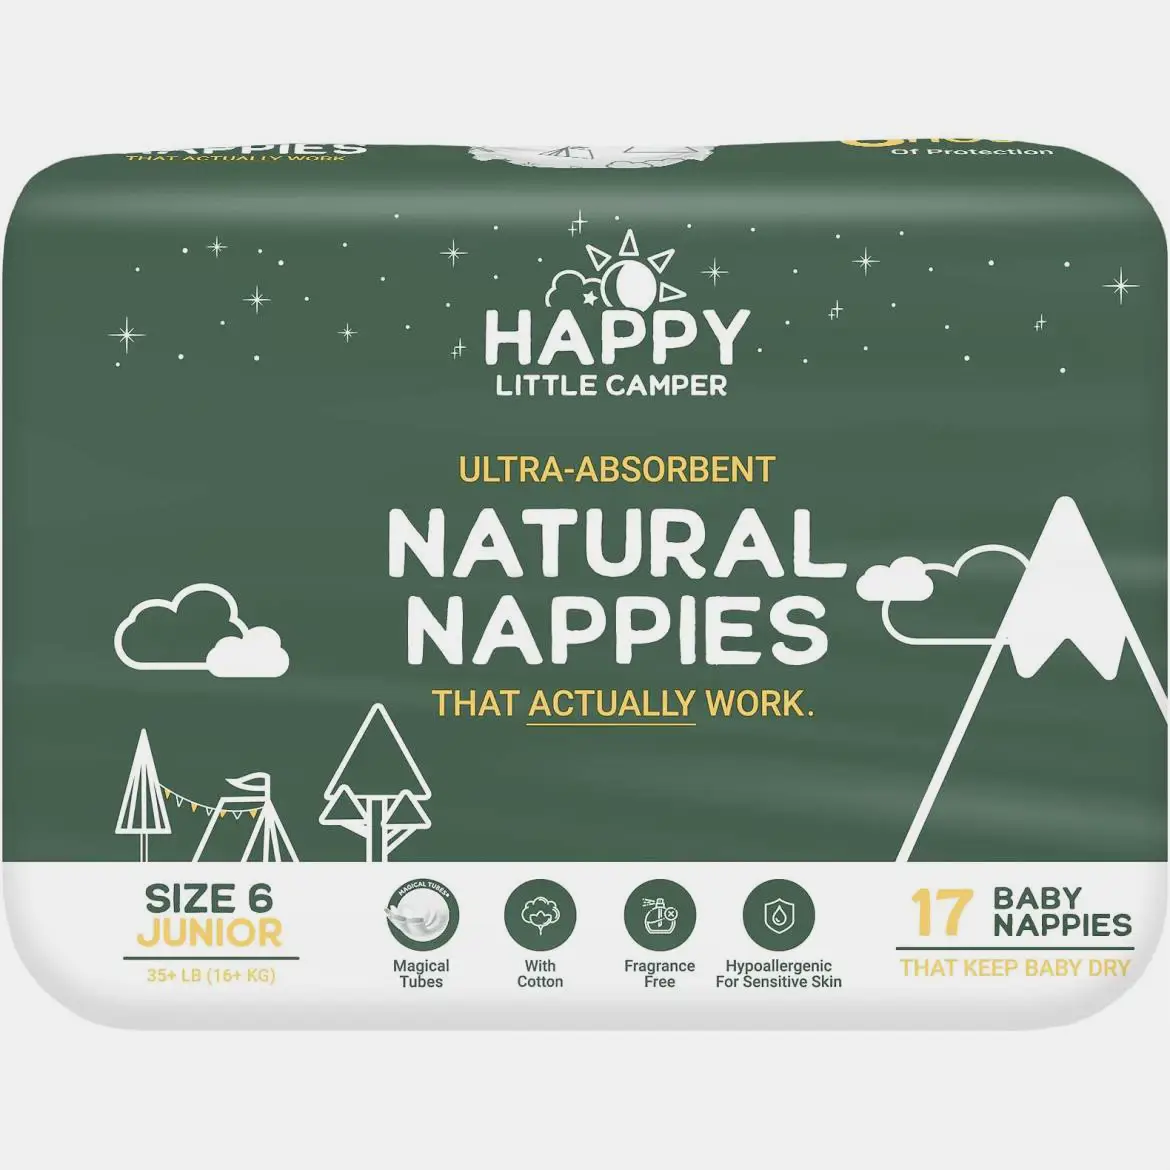 100% Natural Cotton Applicator Free Tampons (Regular) - Happy Little Camper